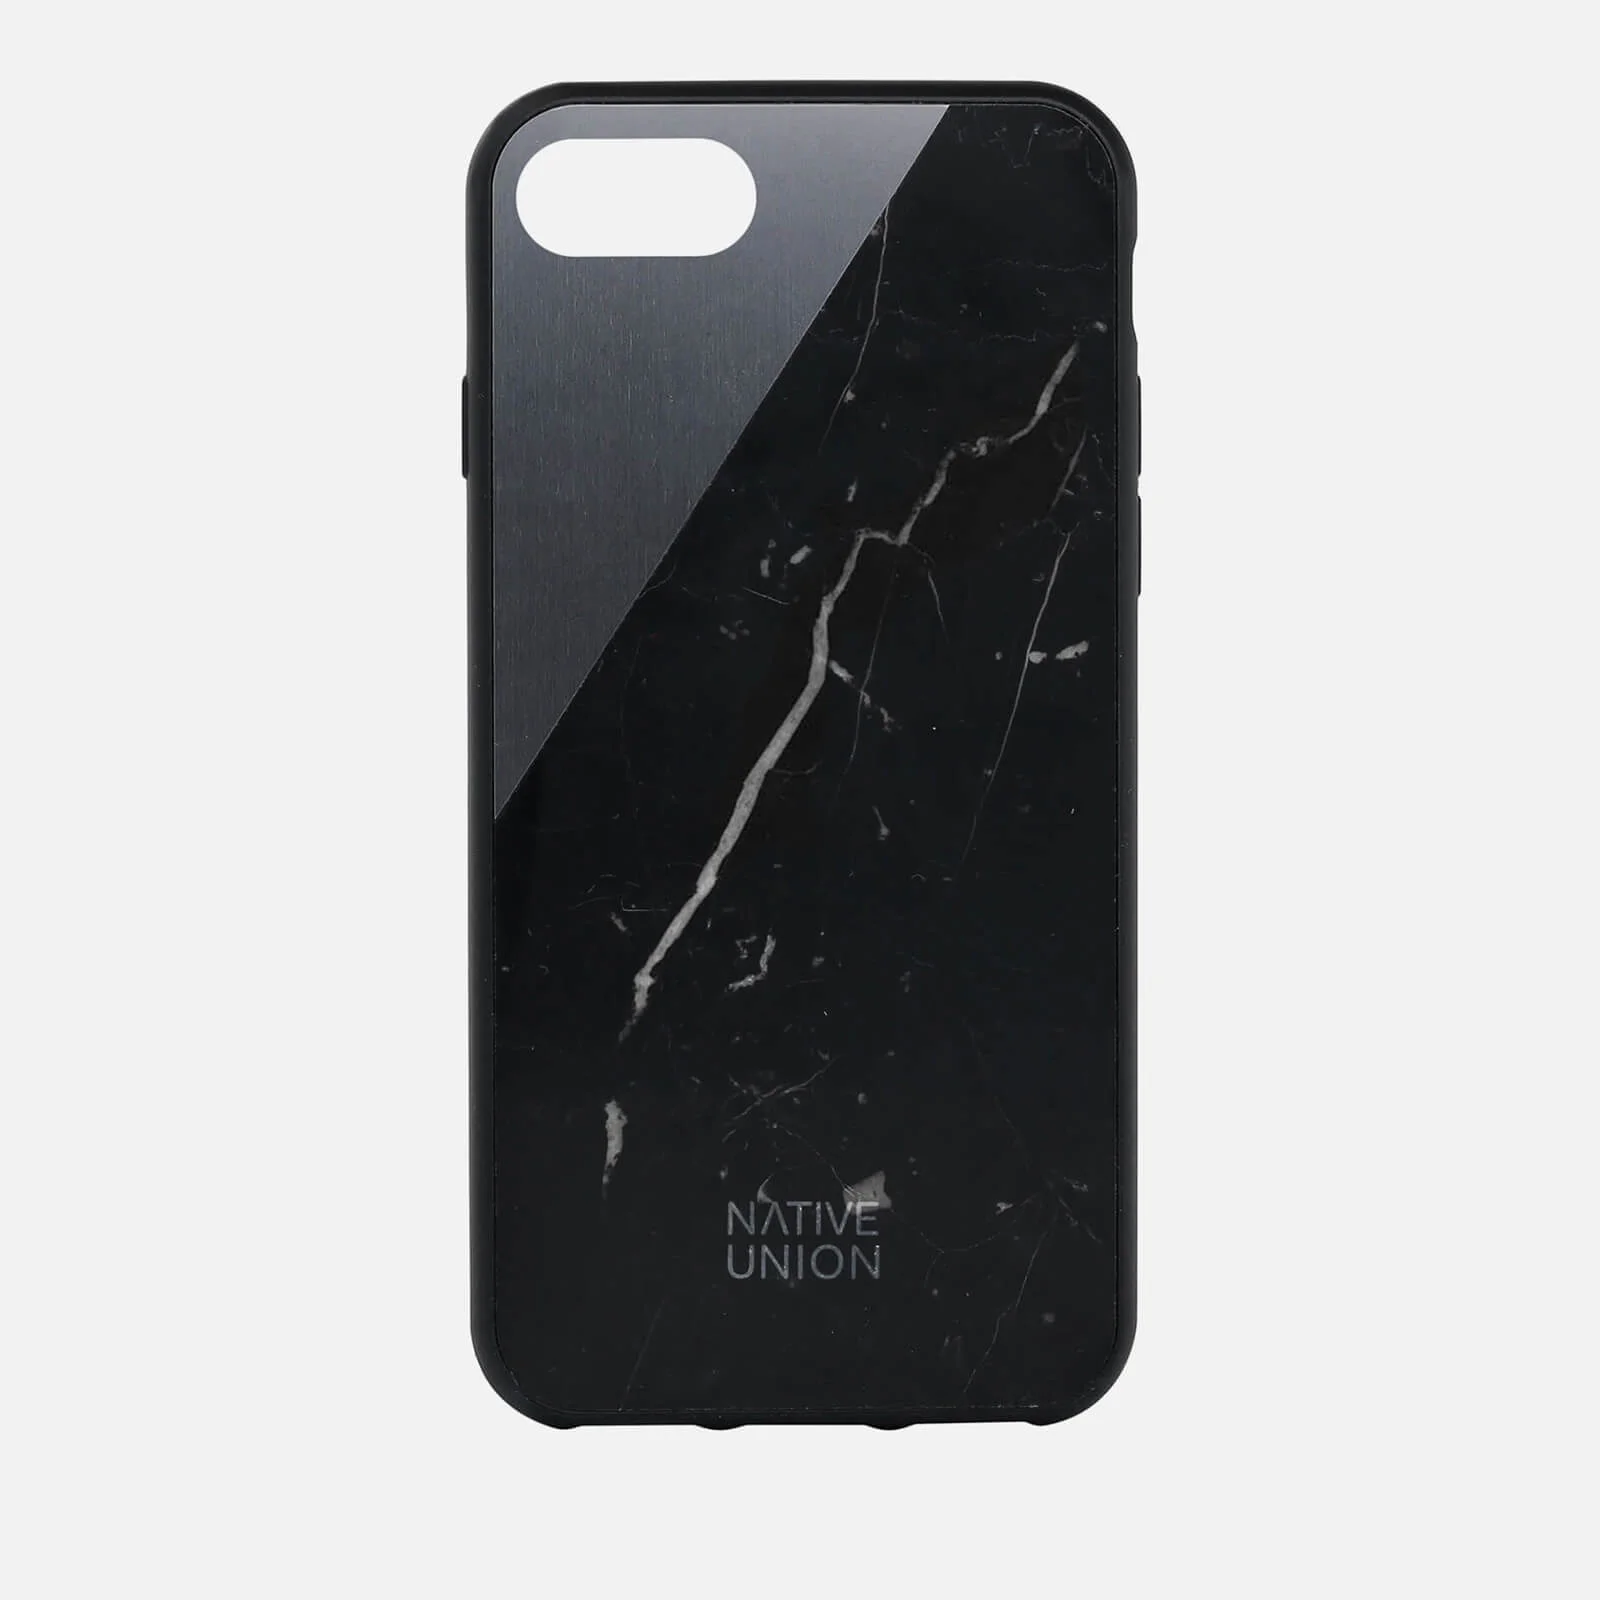 Native Union Clic Marble Metal iPhone 7 Case - Black Image 1